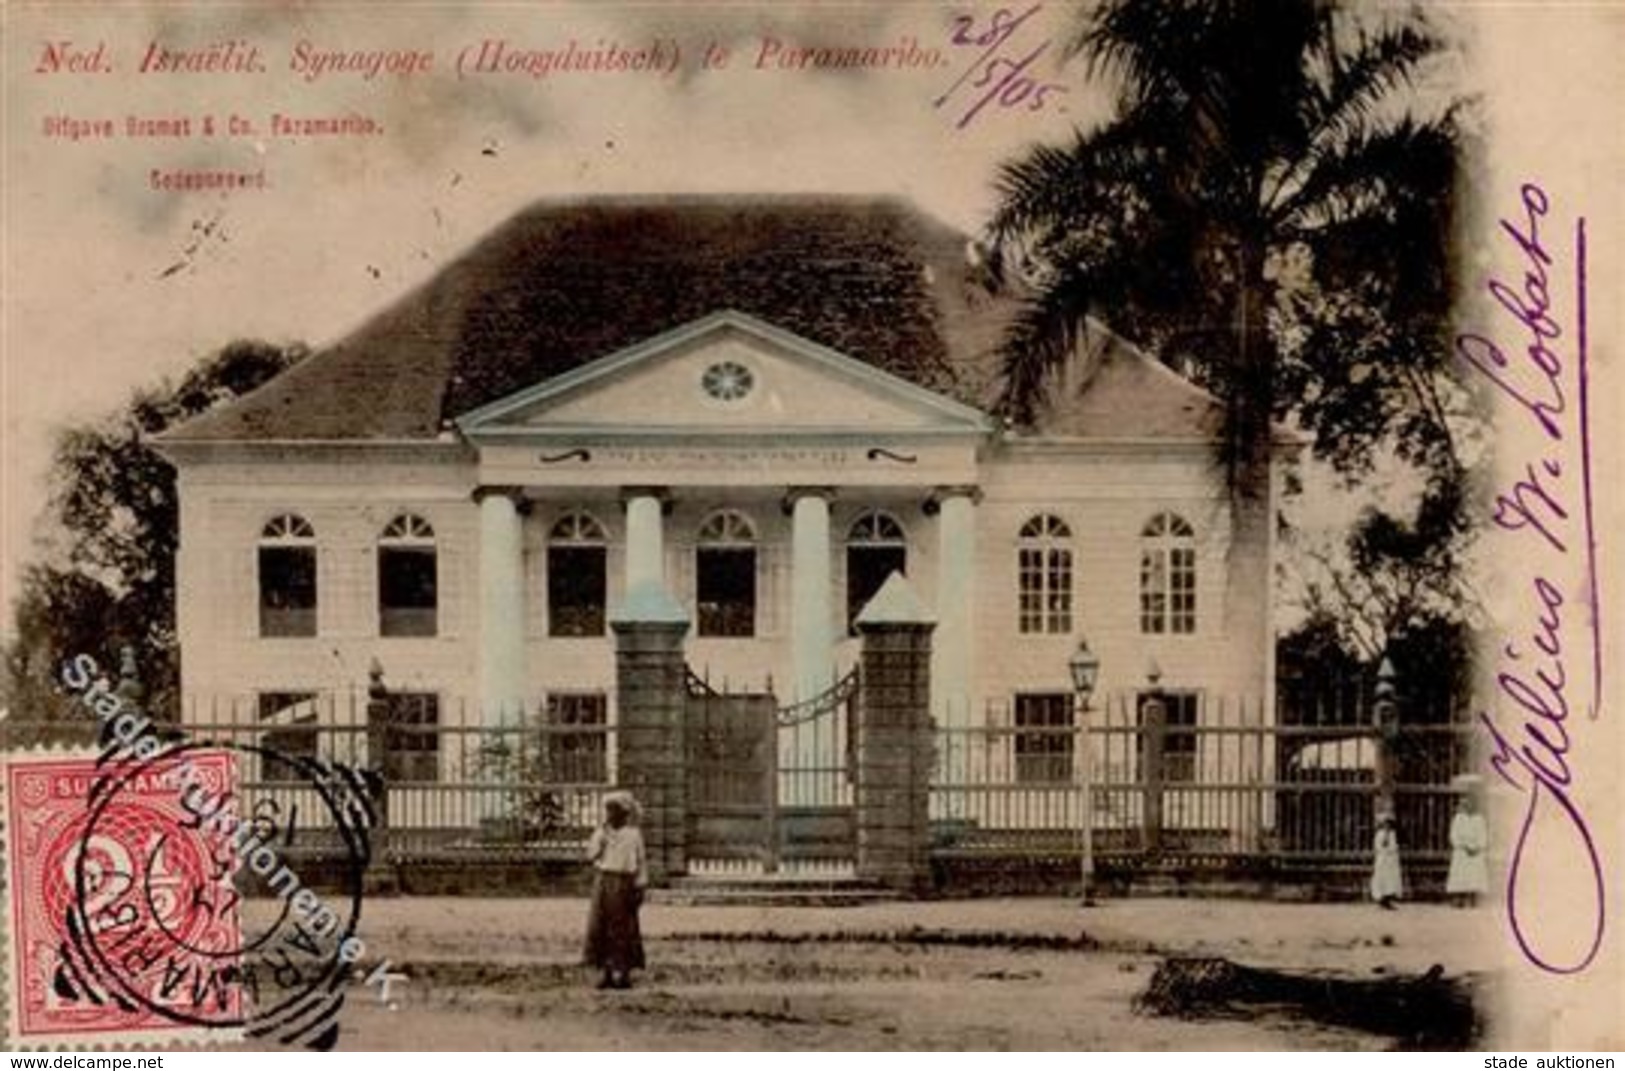 Synagoge PARAMARBO,Surinam - Ned.israet. Synagoge I-II Synagogue - Jewish